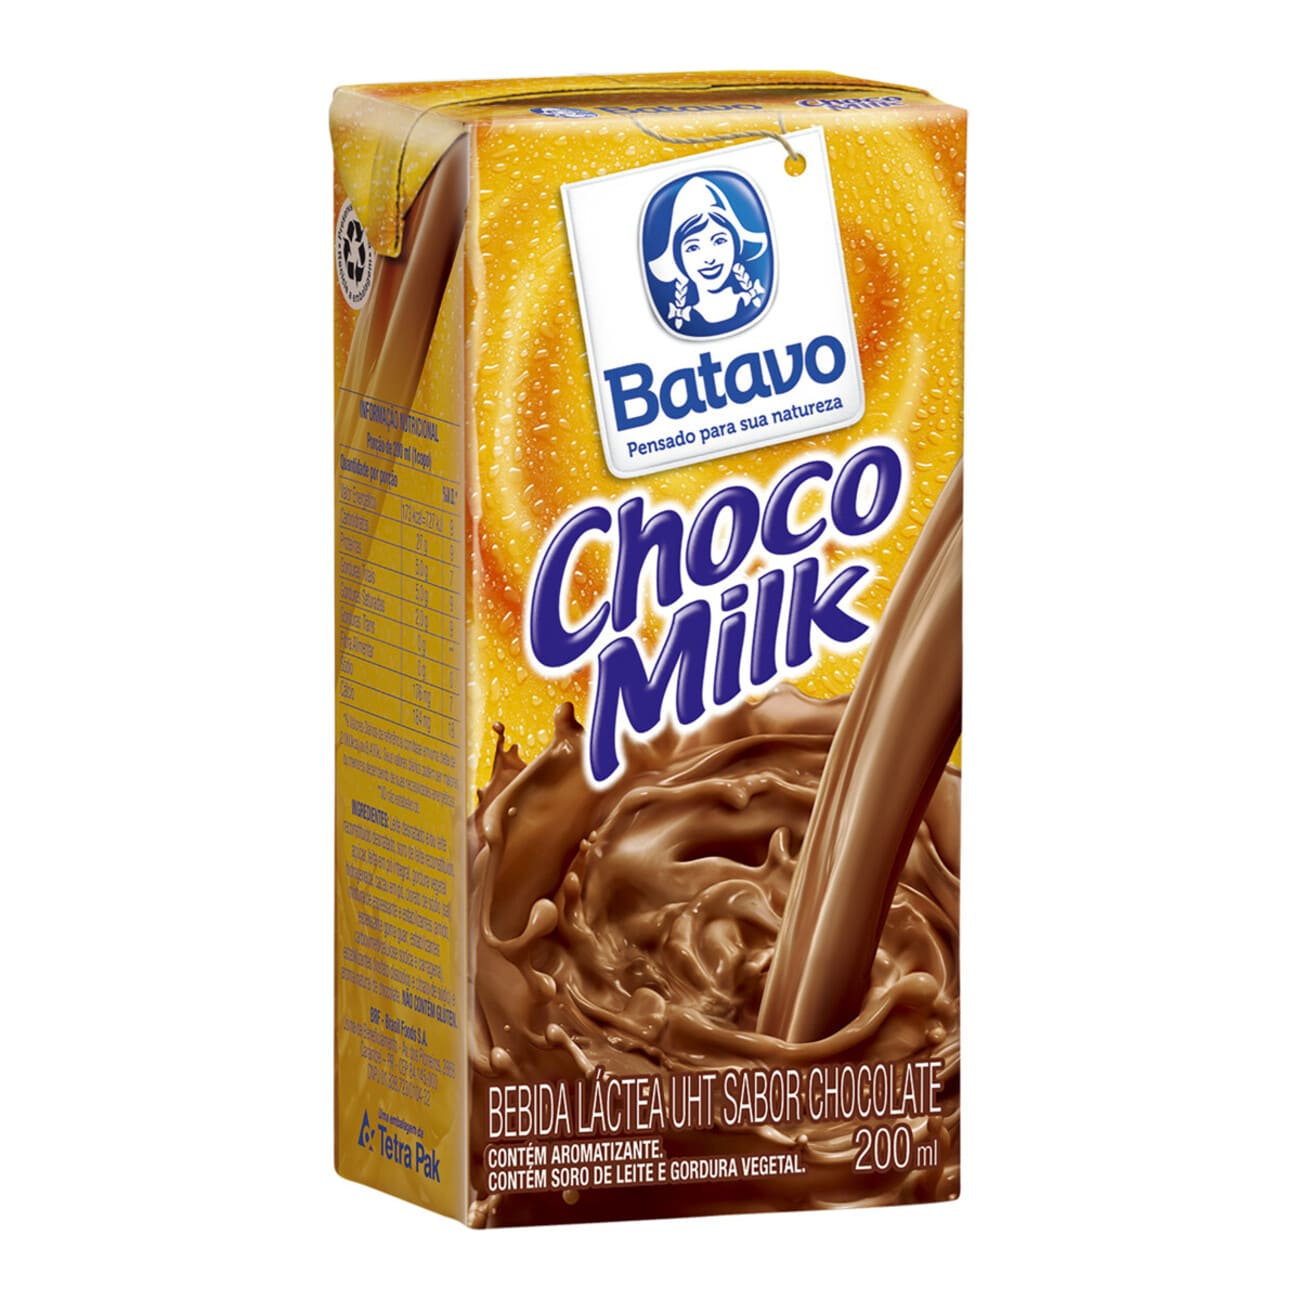 Bebida Lctea UHT Chocolate Batavo Choco Milk Caixa 200ml